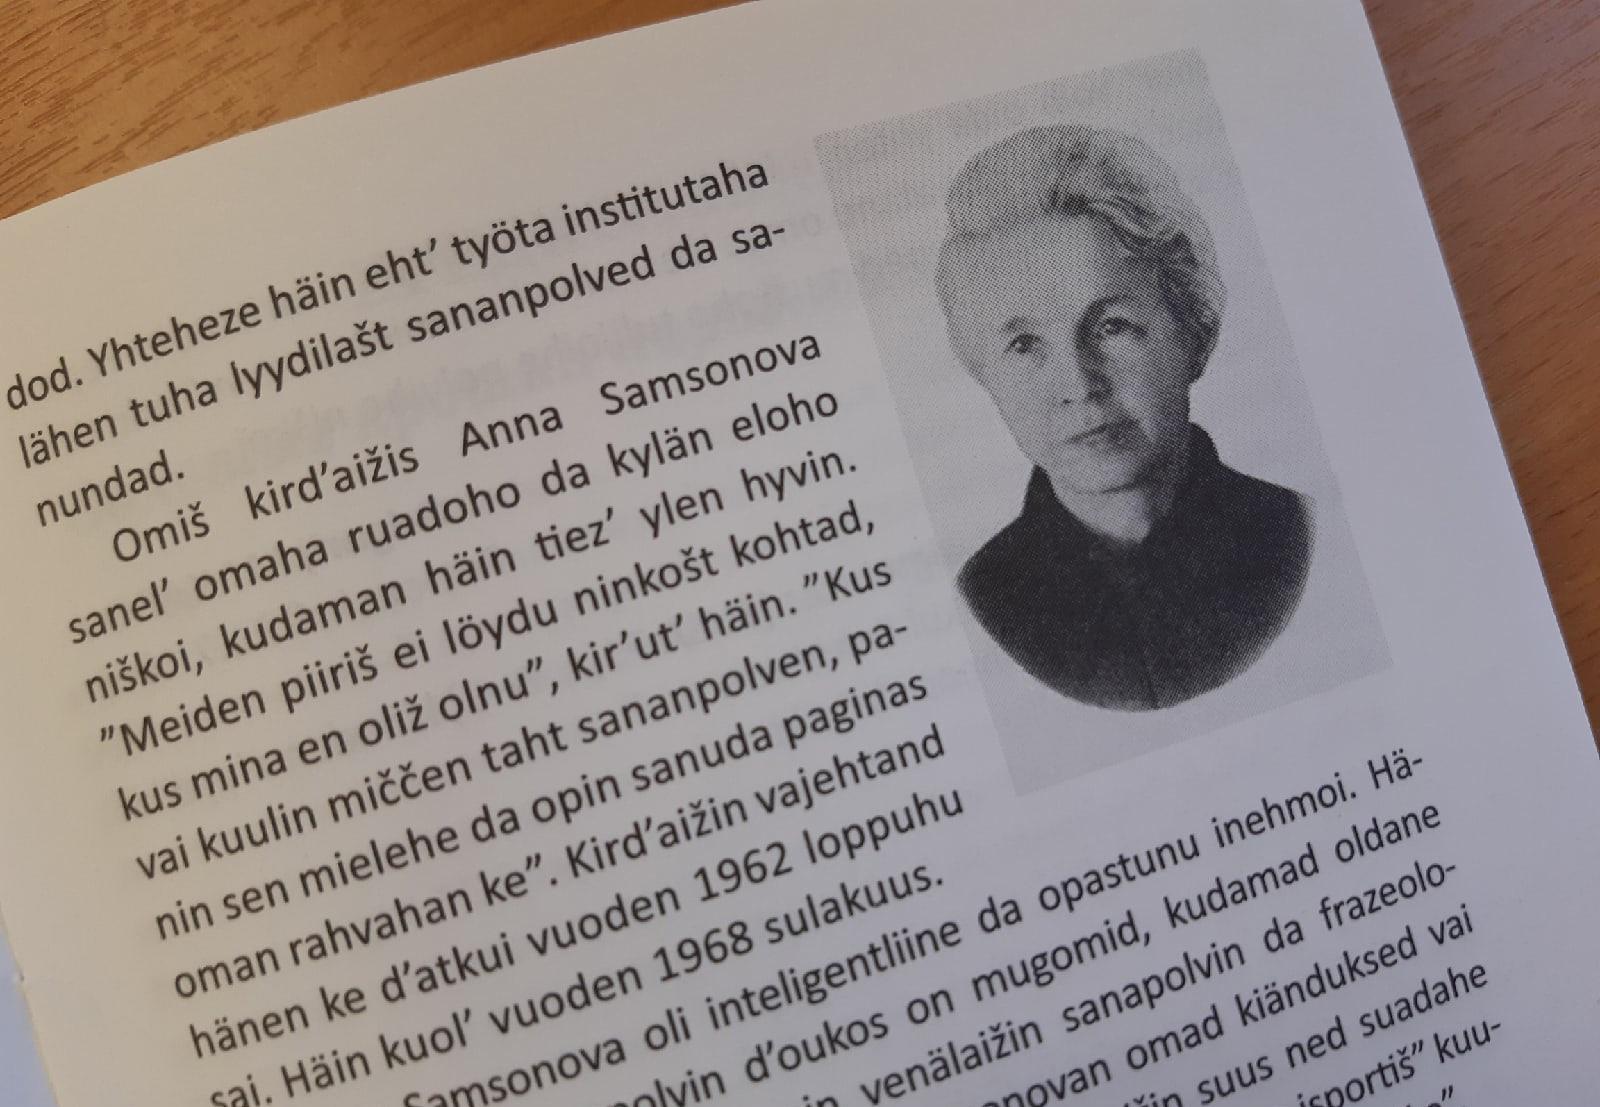 Anna Samsonovan paginois oli rahvahan viizahuttu da karjalan kielen rikkahuttu. Kuva on otettu Priäžan lyydilaižad sananpolved -kniigaspäi.  